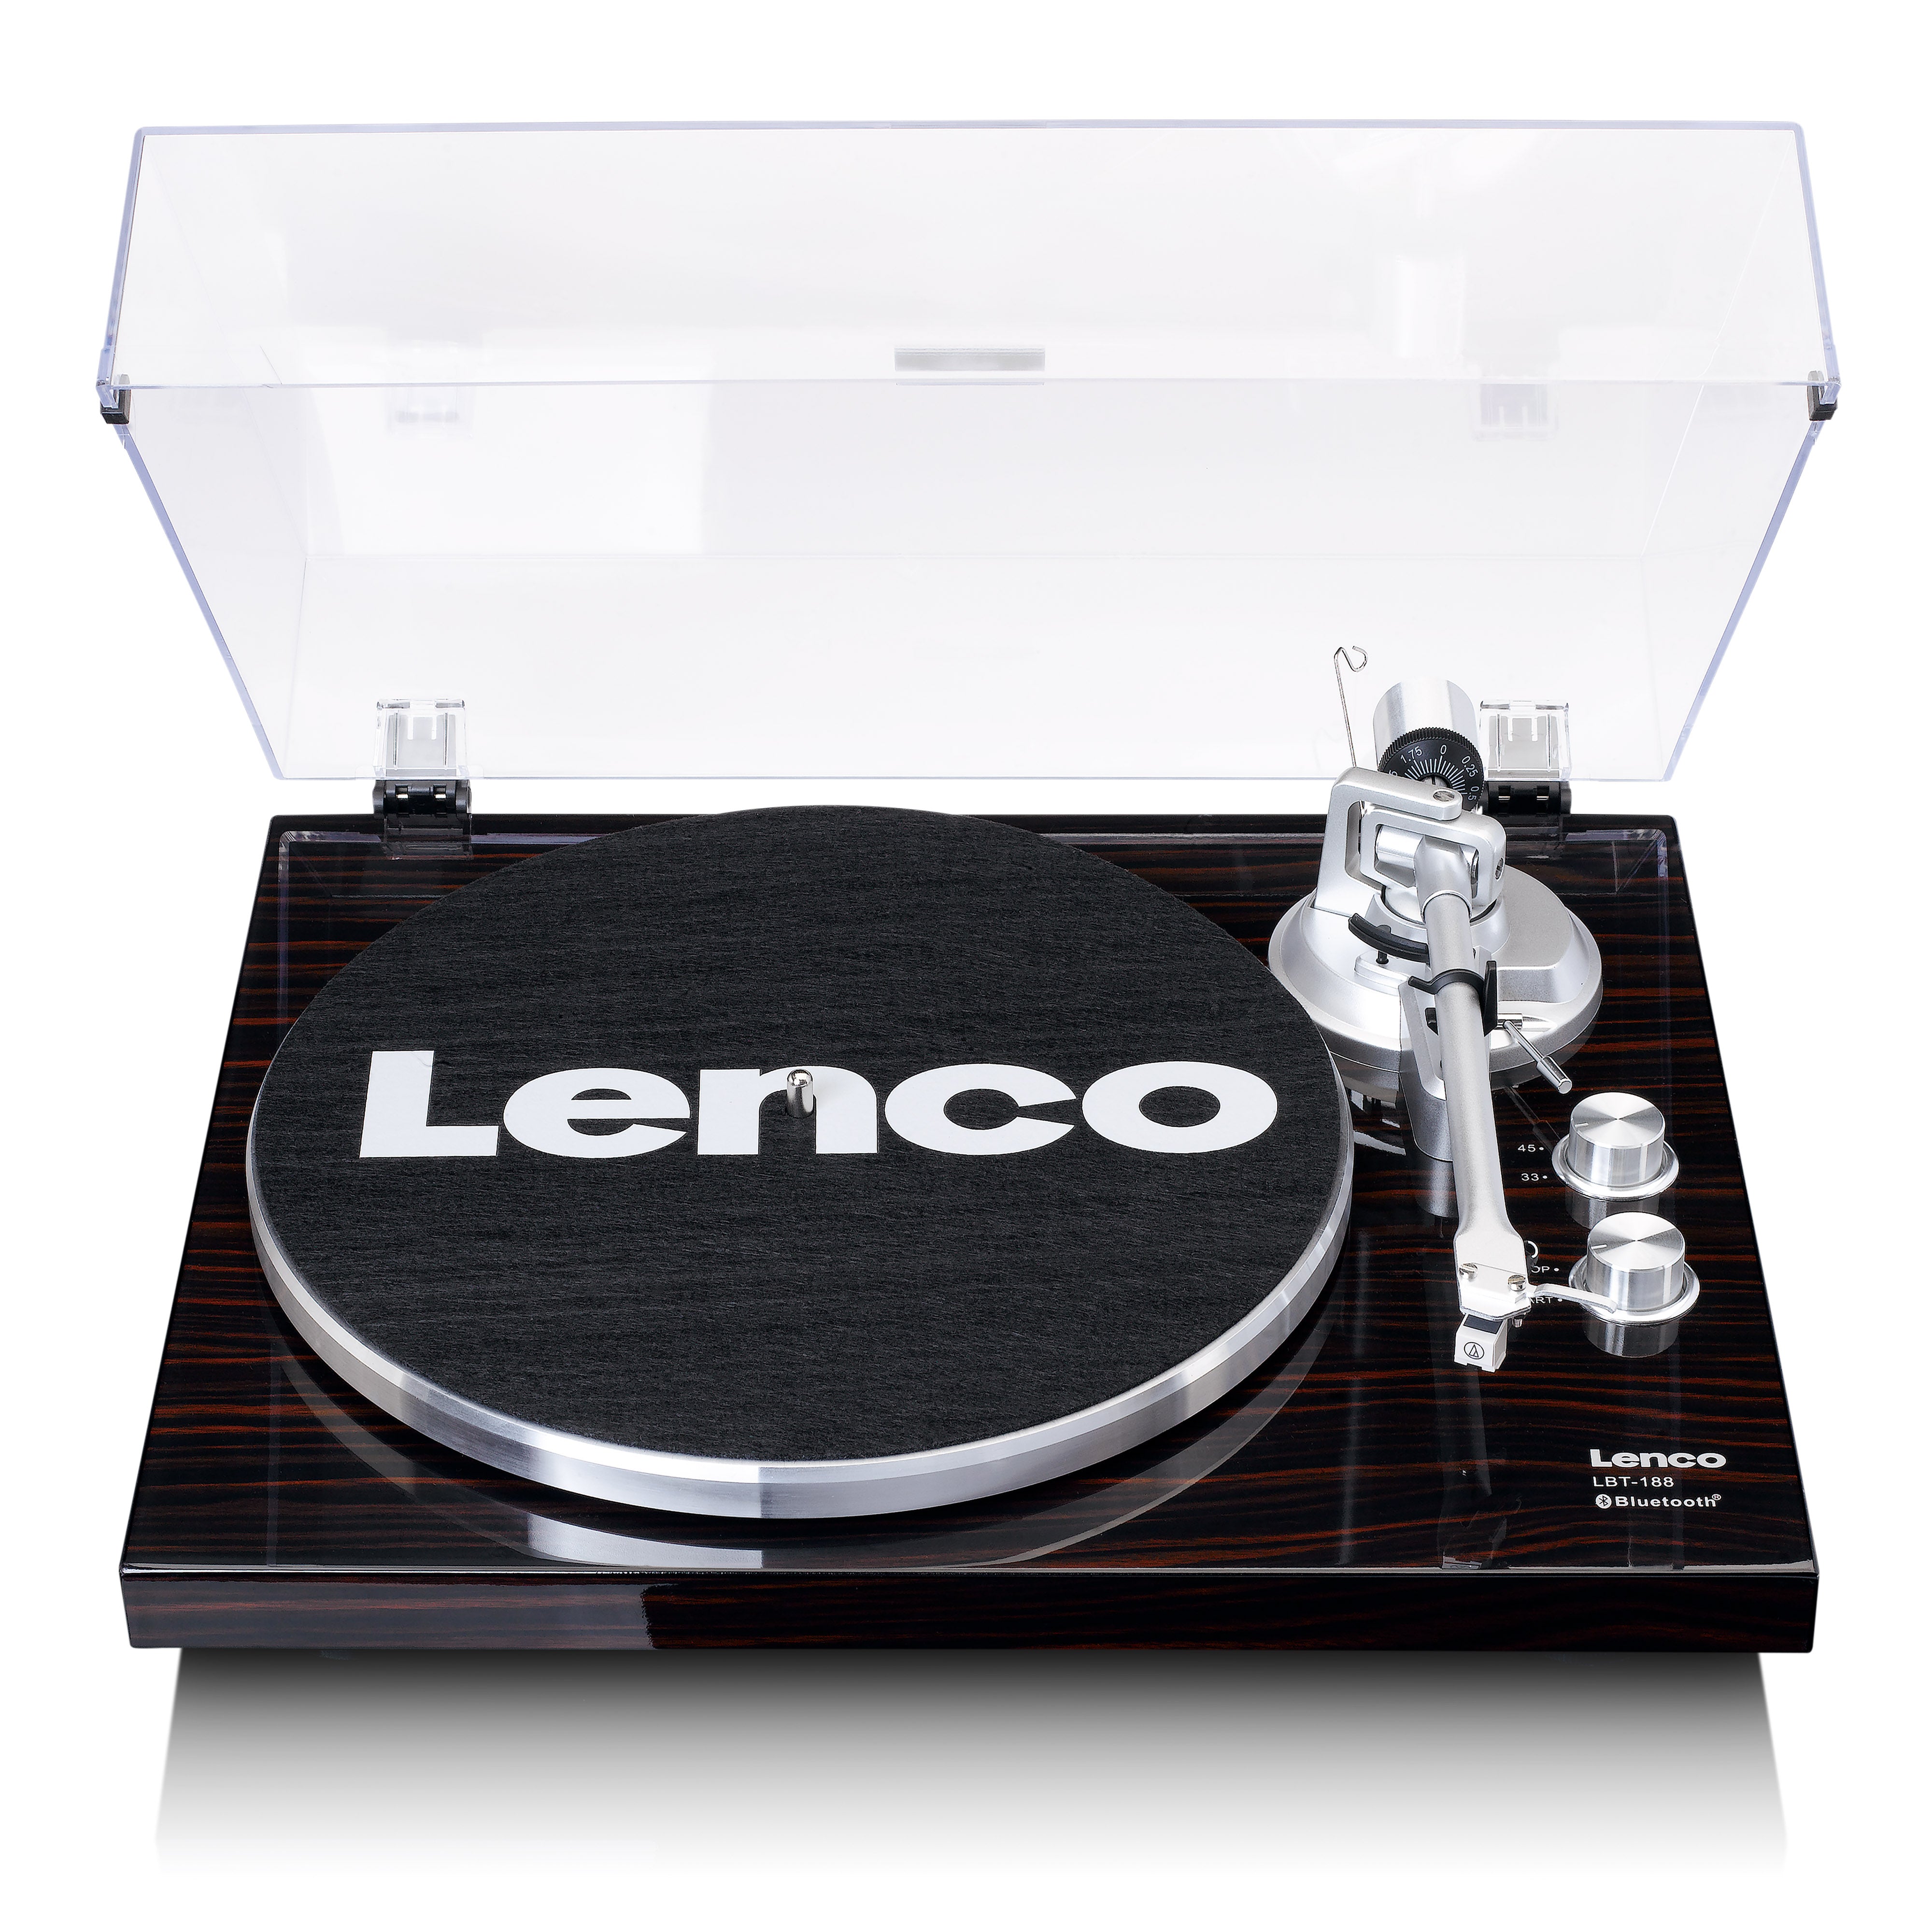 Lenco LBT-188WA kaufen? offiziellen Offizieller Lenco.de im – Jetzt Webshop Lenco Webshop - 